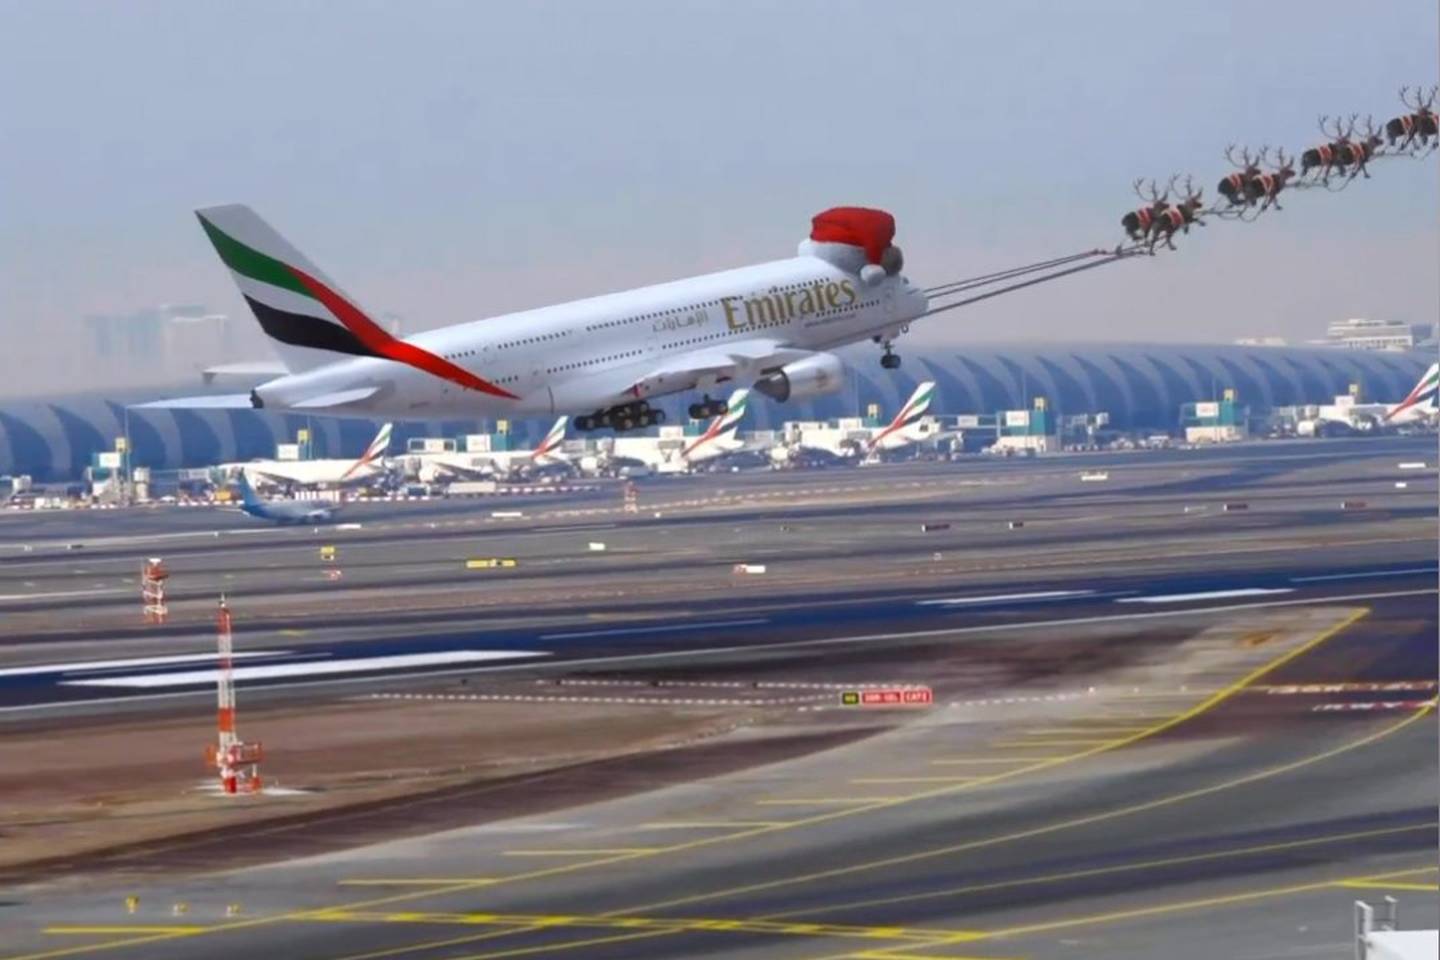 Reindeer take off with Emirates flight at Dubai airport